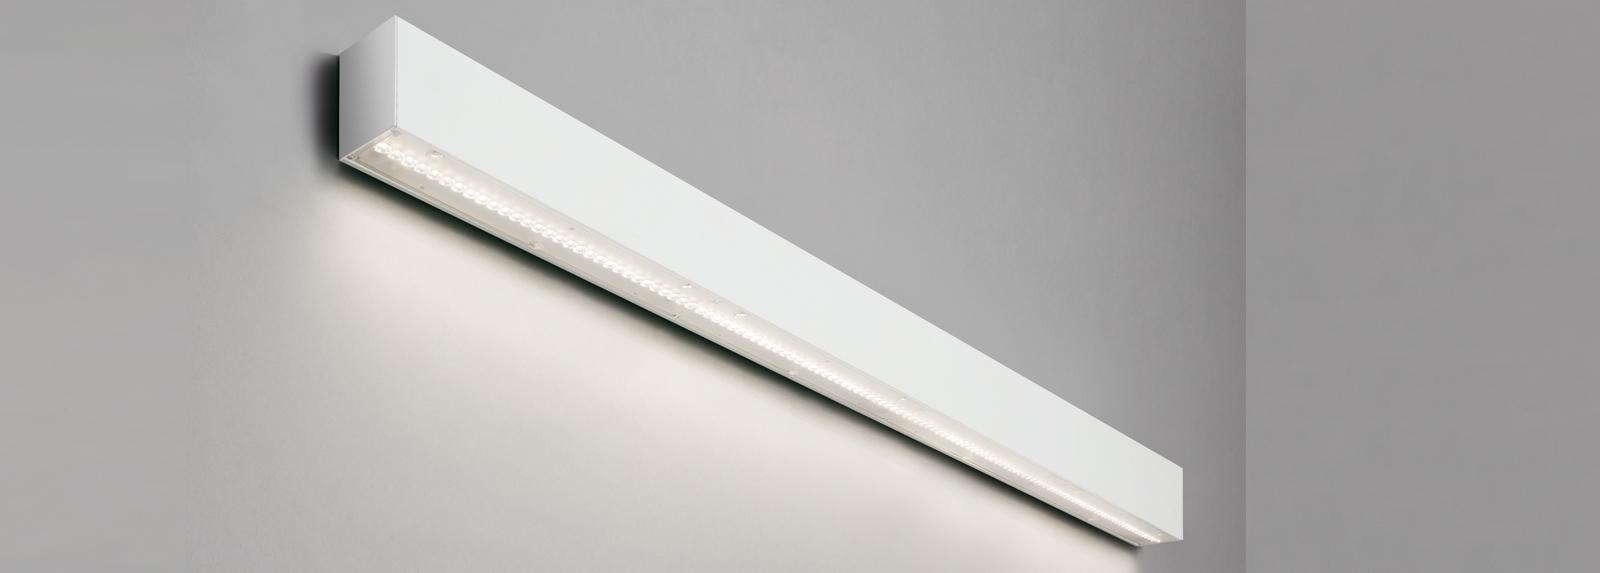 HORIZON 600 | Wall-mounted linear luminaires